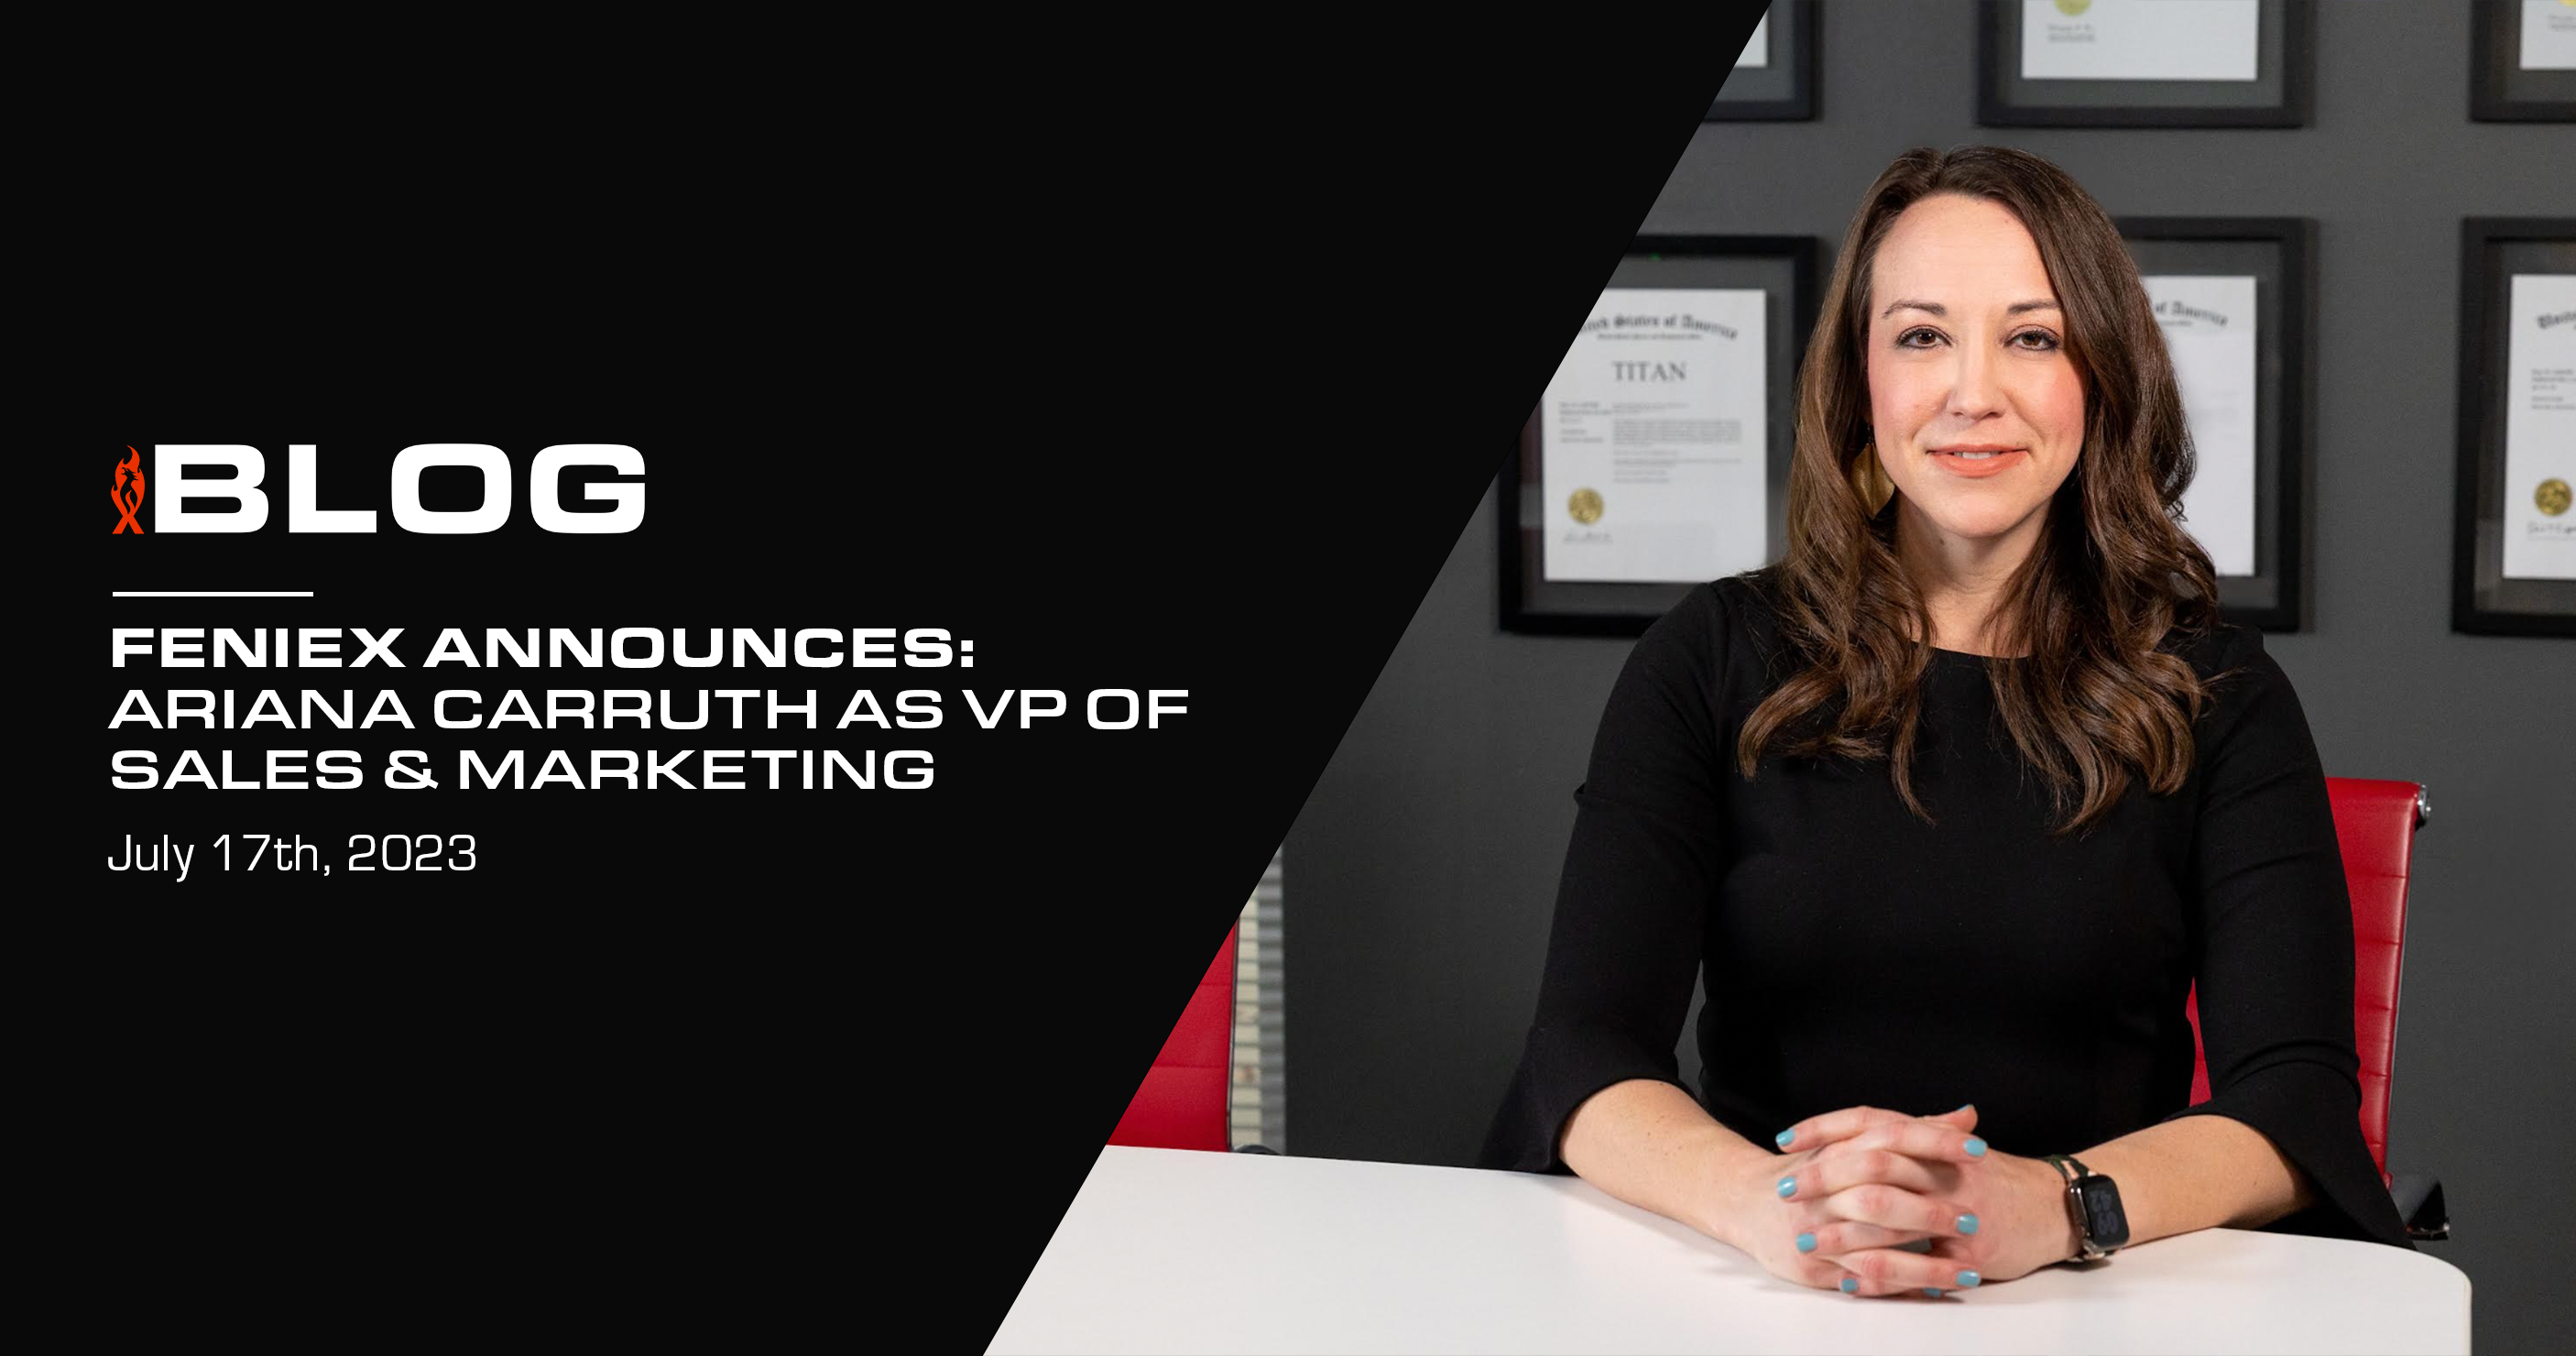 Feniex Announces: Ariana Carruth as VP of Sales & Marketing